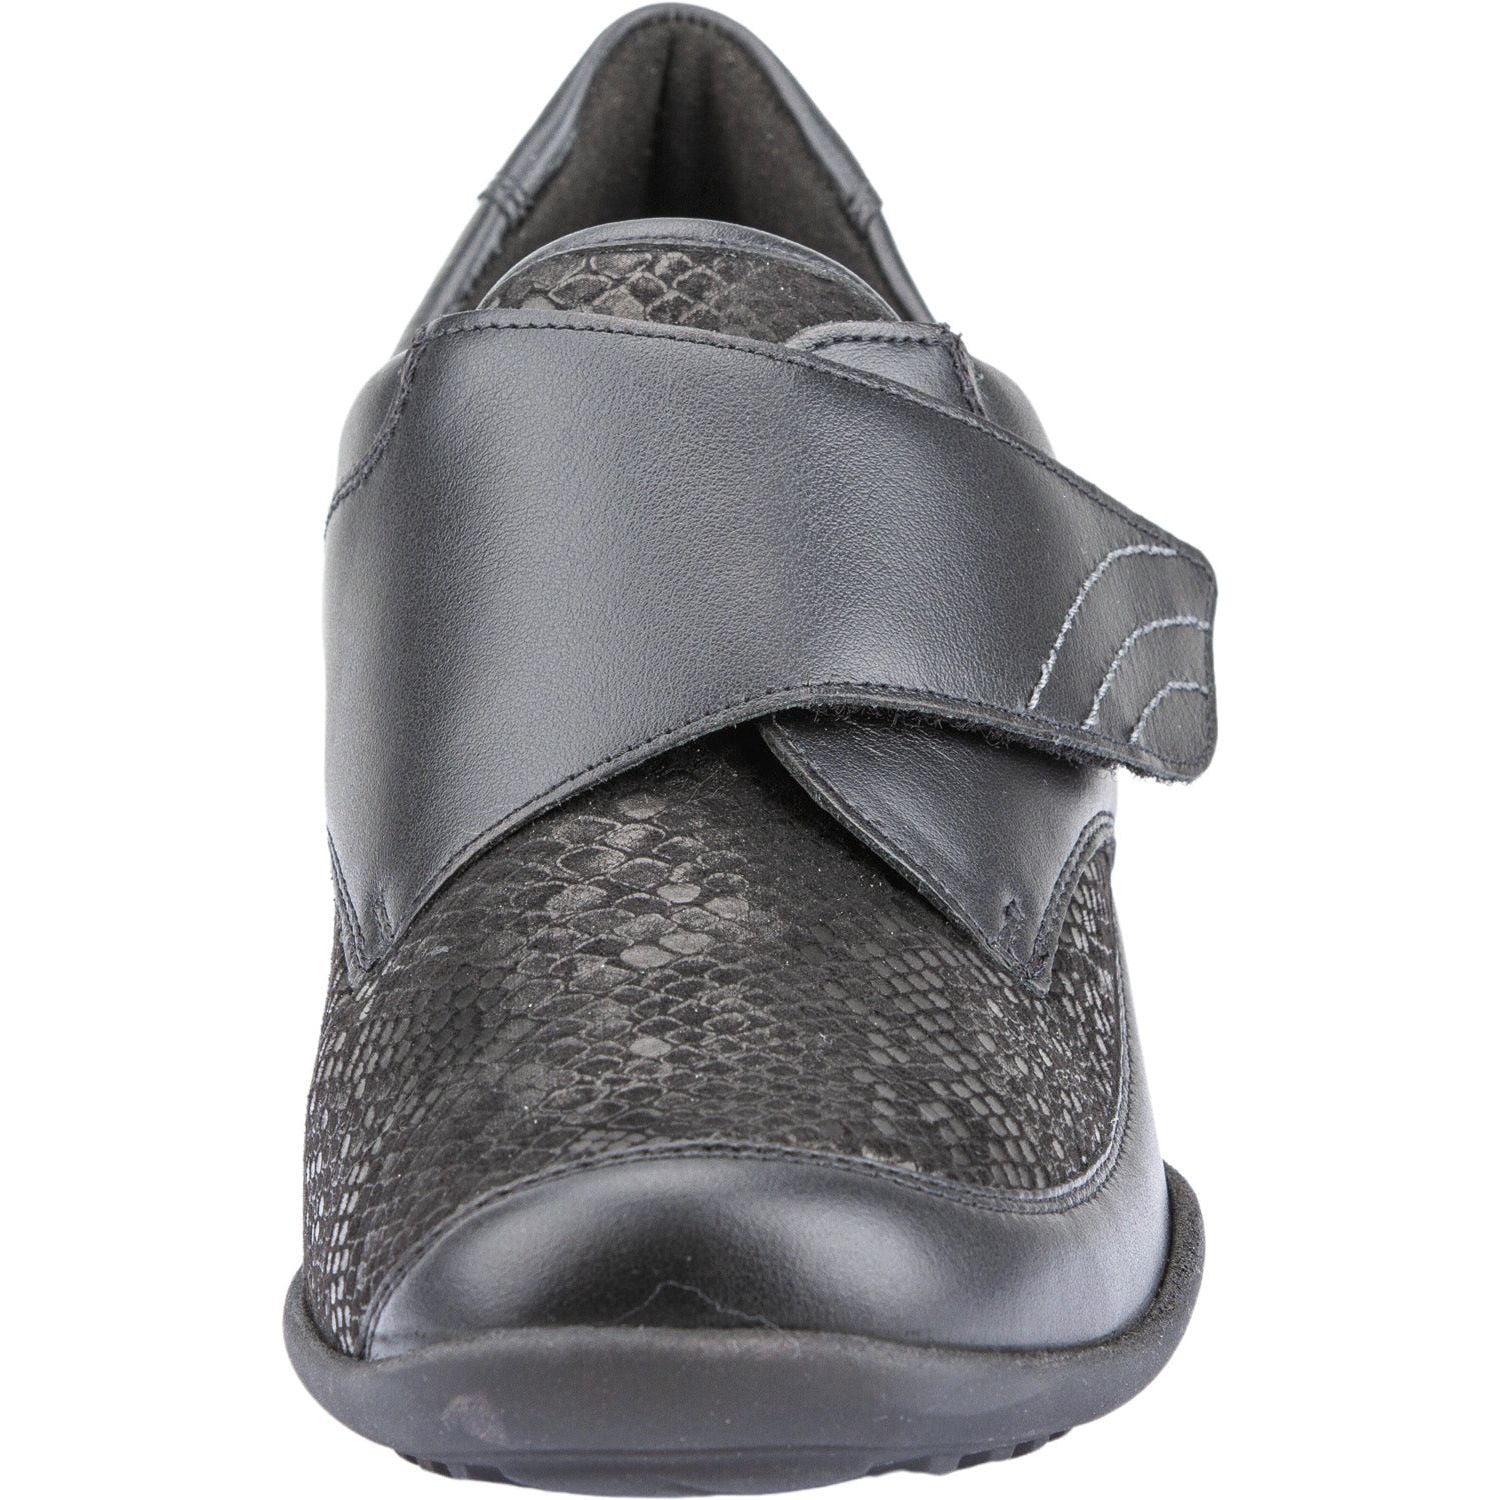 Waldlaufer Katja (K01304)- Ladies Wide Fit Velcro Shoe in Black | Waldlaufer Shoes & Boots | Wide fit Shoes | Wisemans | Bantry | West Cork | Cork | Ireland